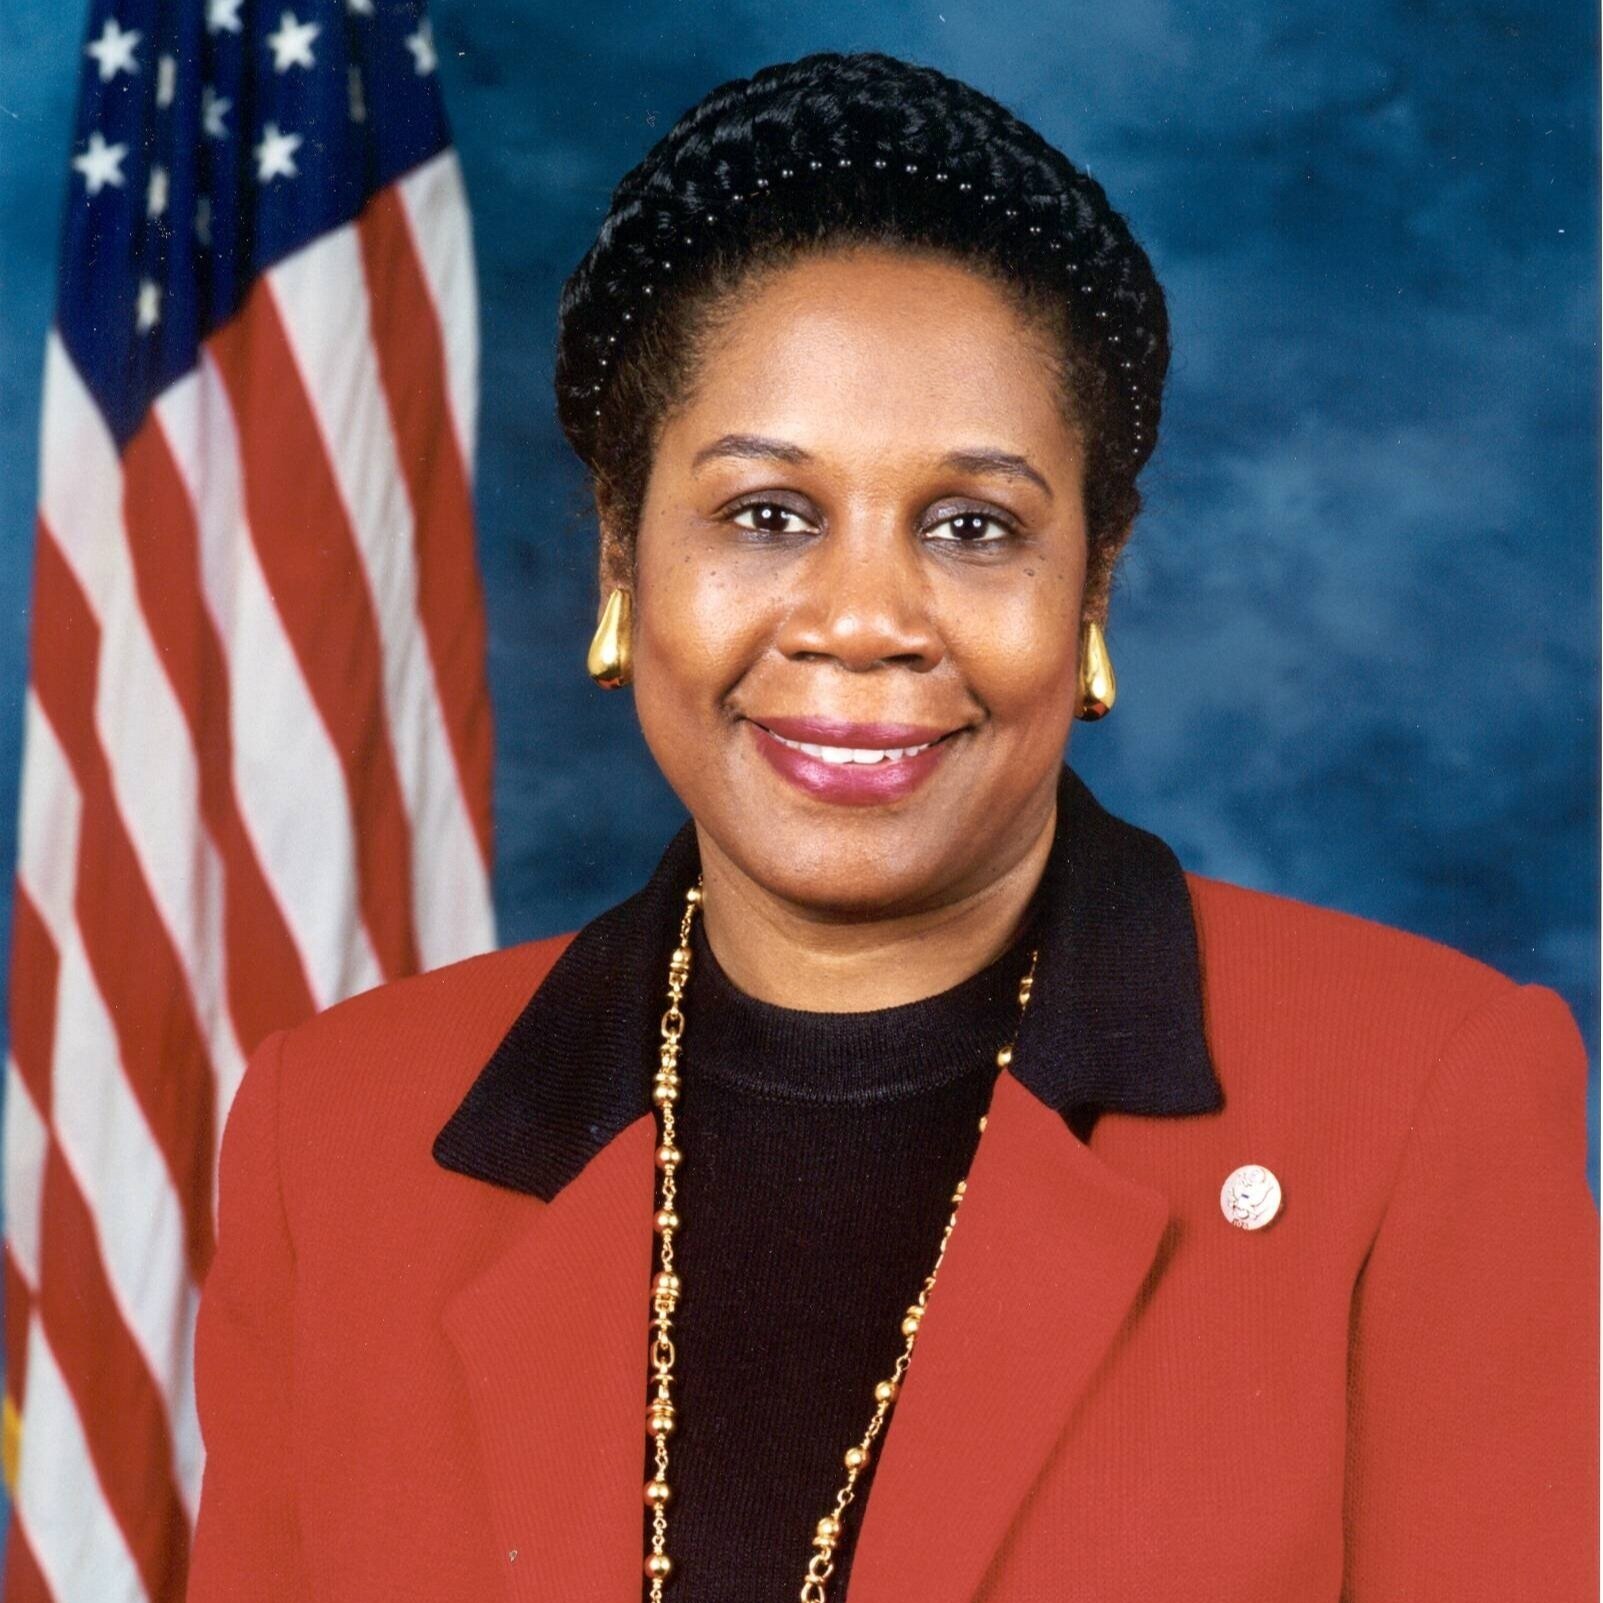 Rep. Sheila Jackson-Lee